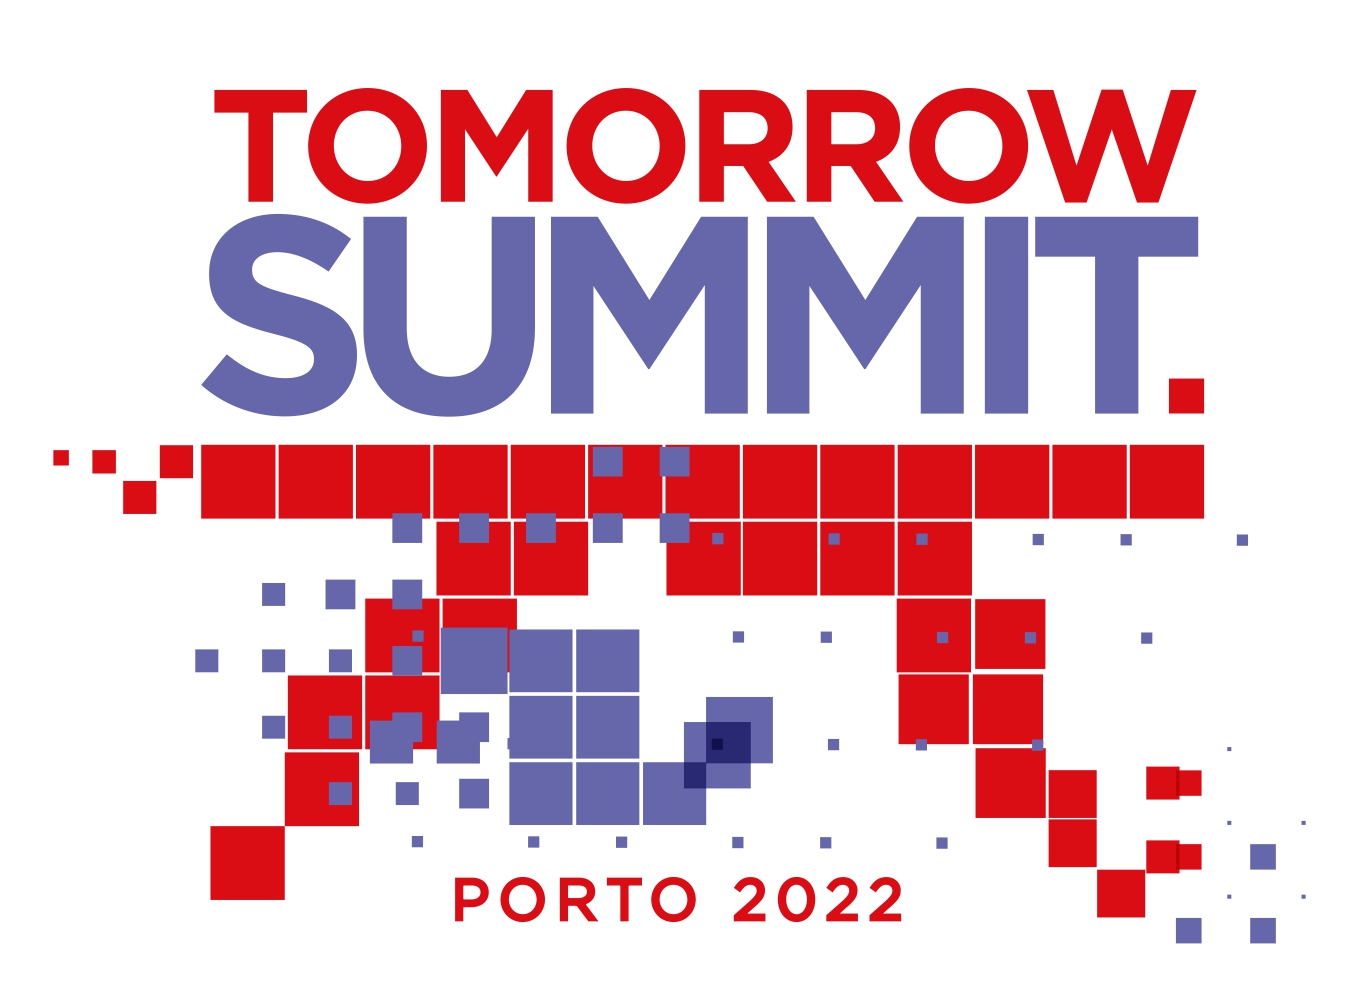 Tomorrow Summit 2022